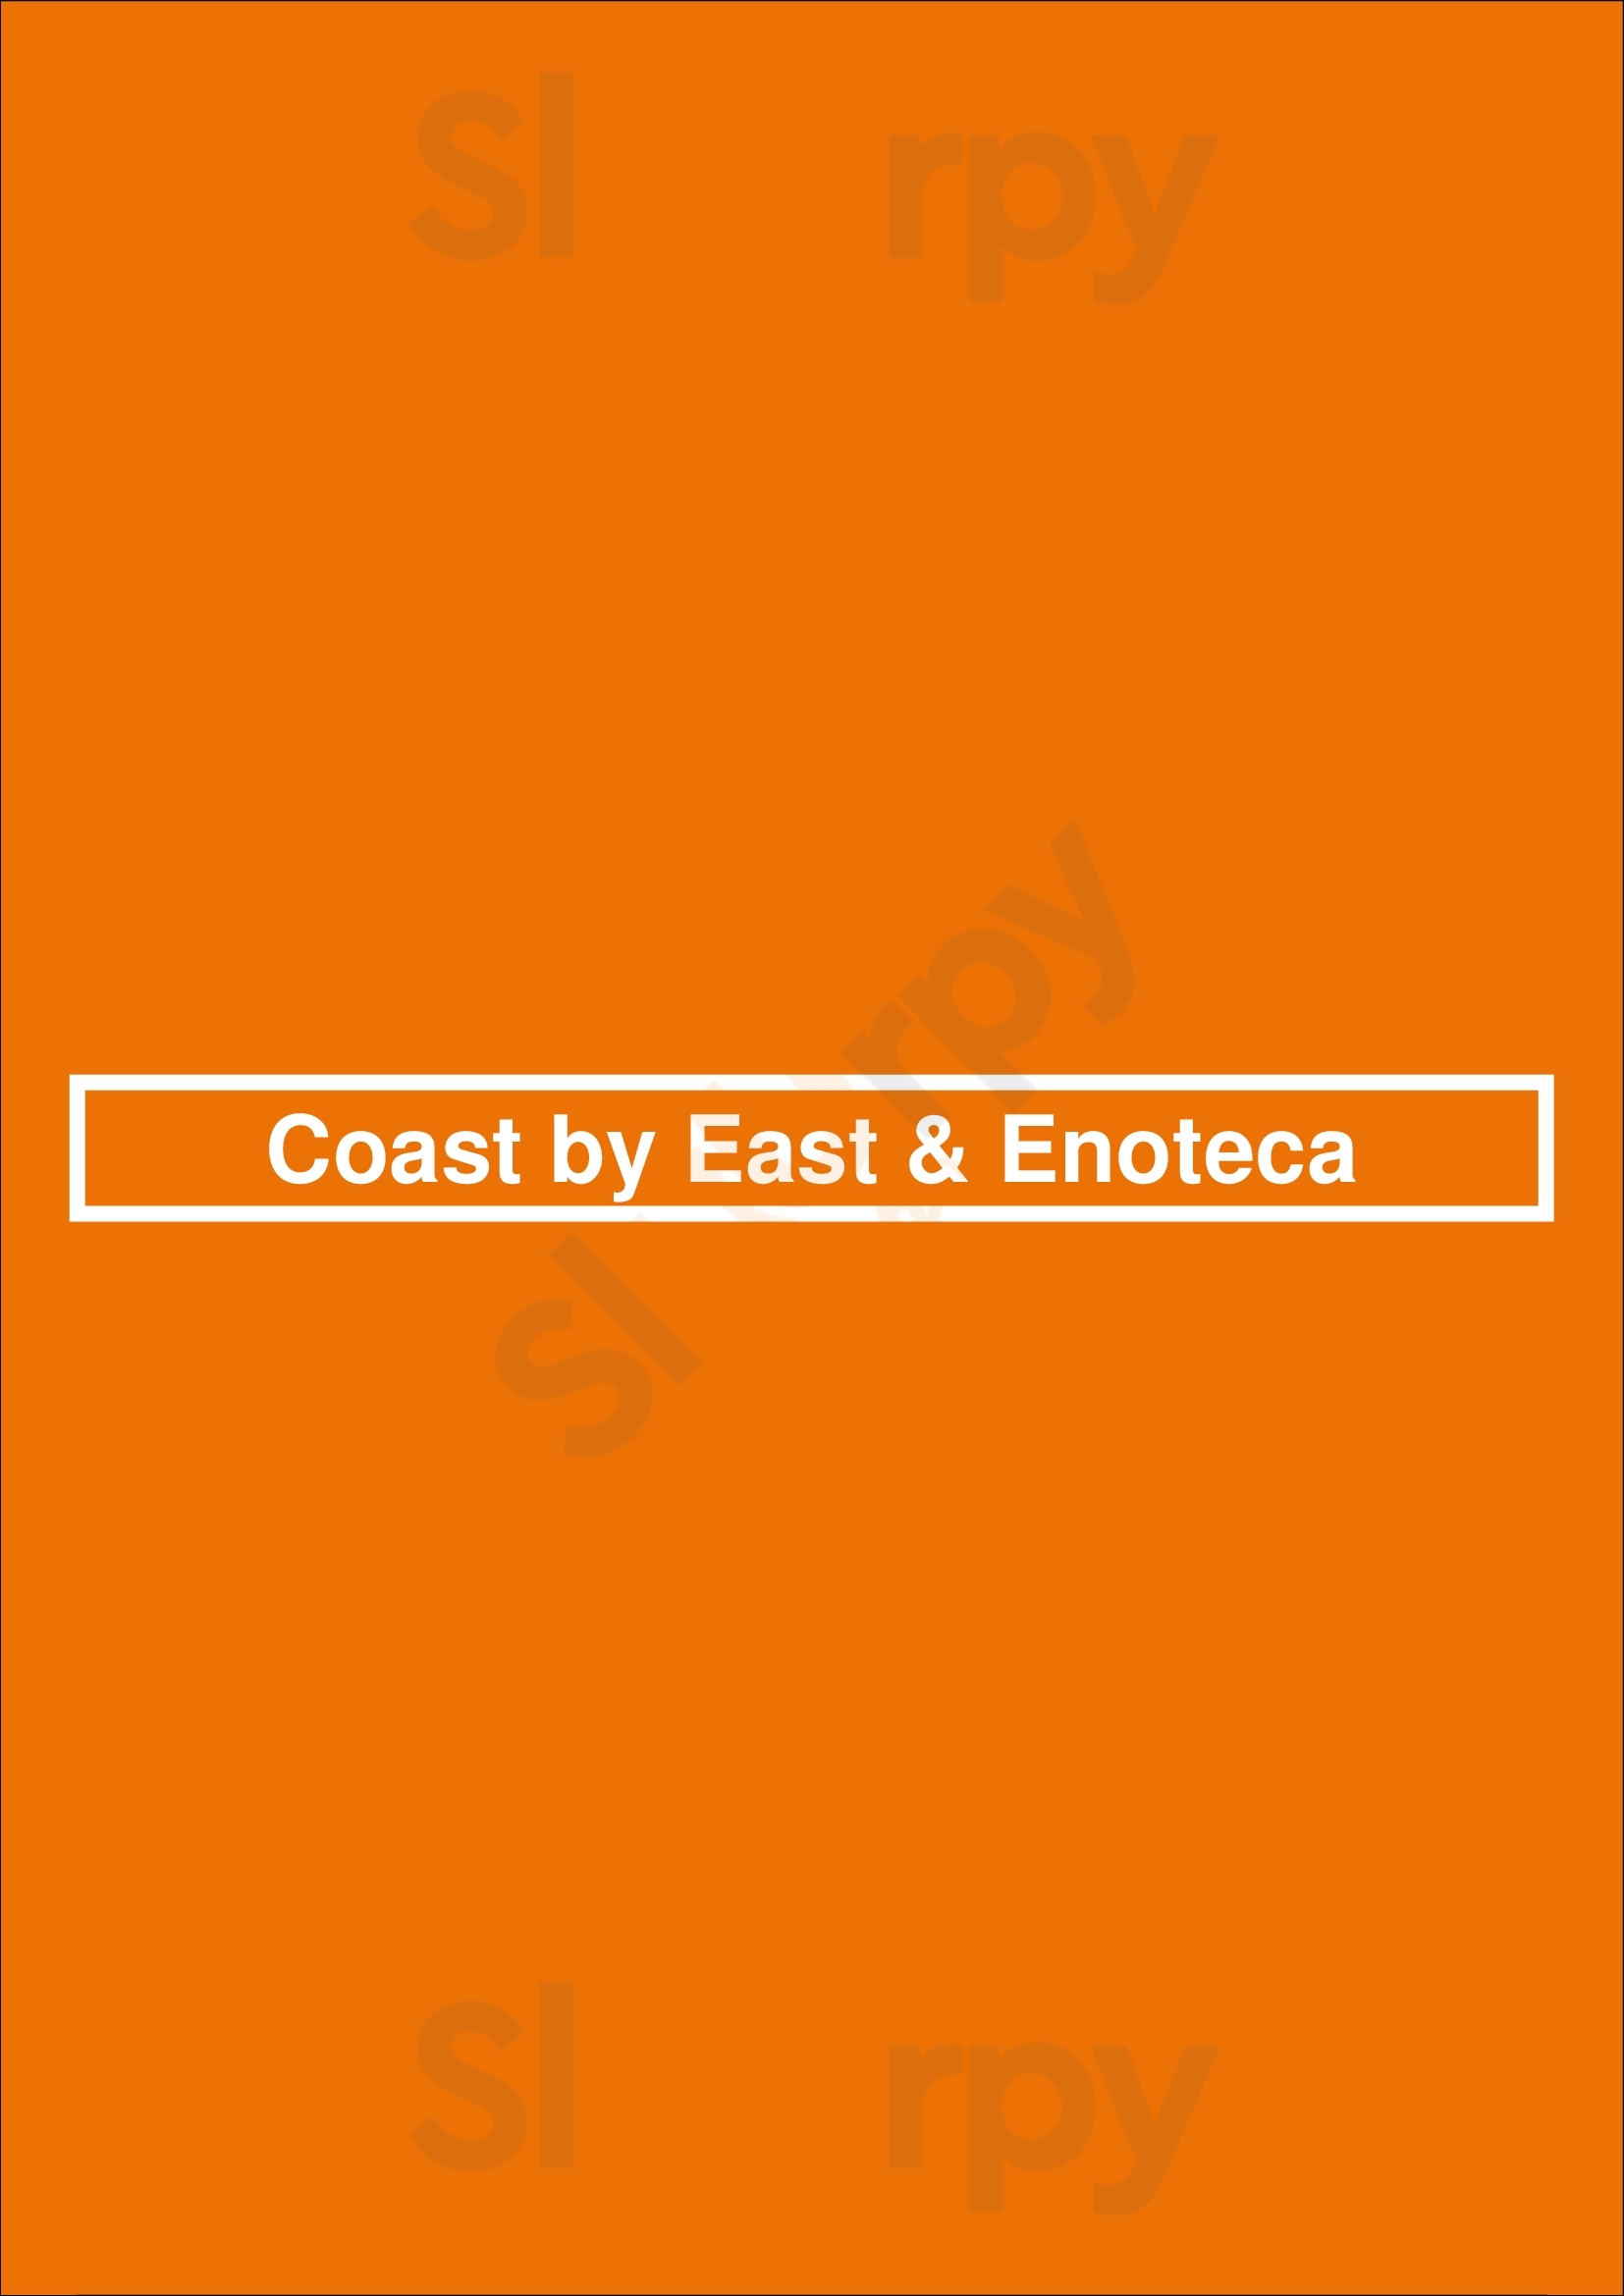 Coast By East & Enoteca Hamburg Menu - 1